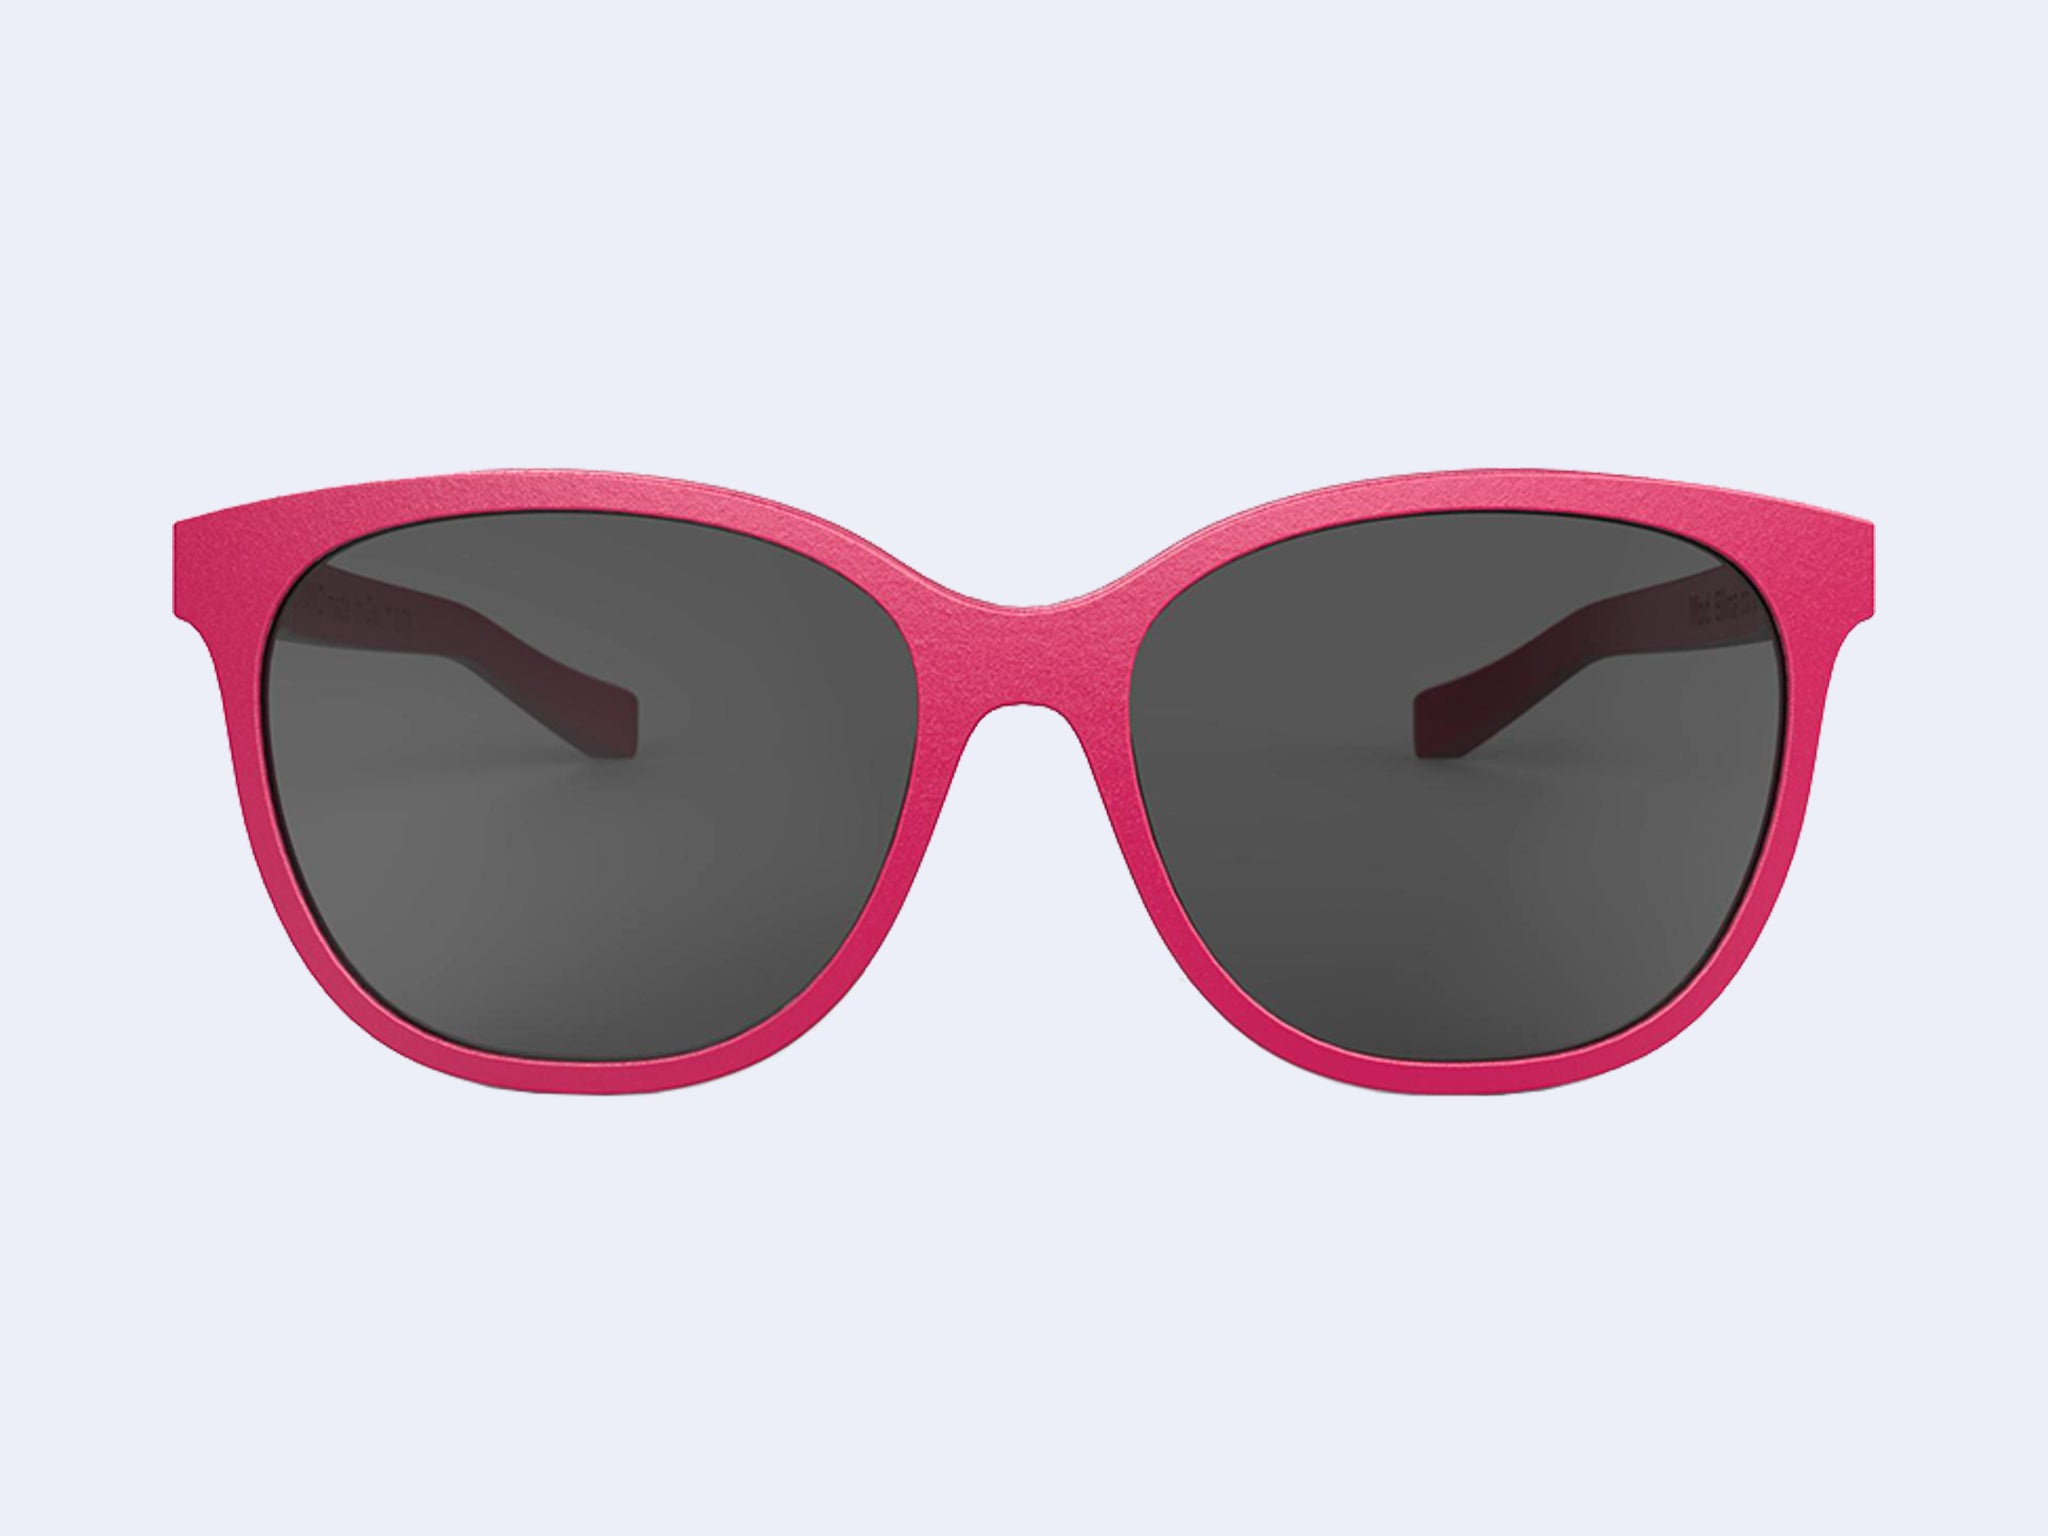 Buy Twenty Dresses By Nykaa Fashion Look Uber Cool Sunglasses Online